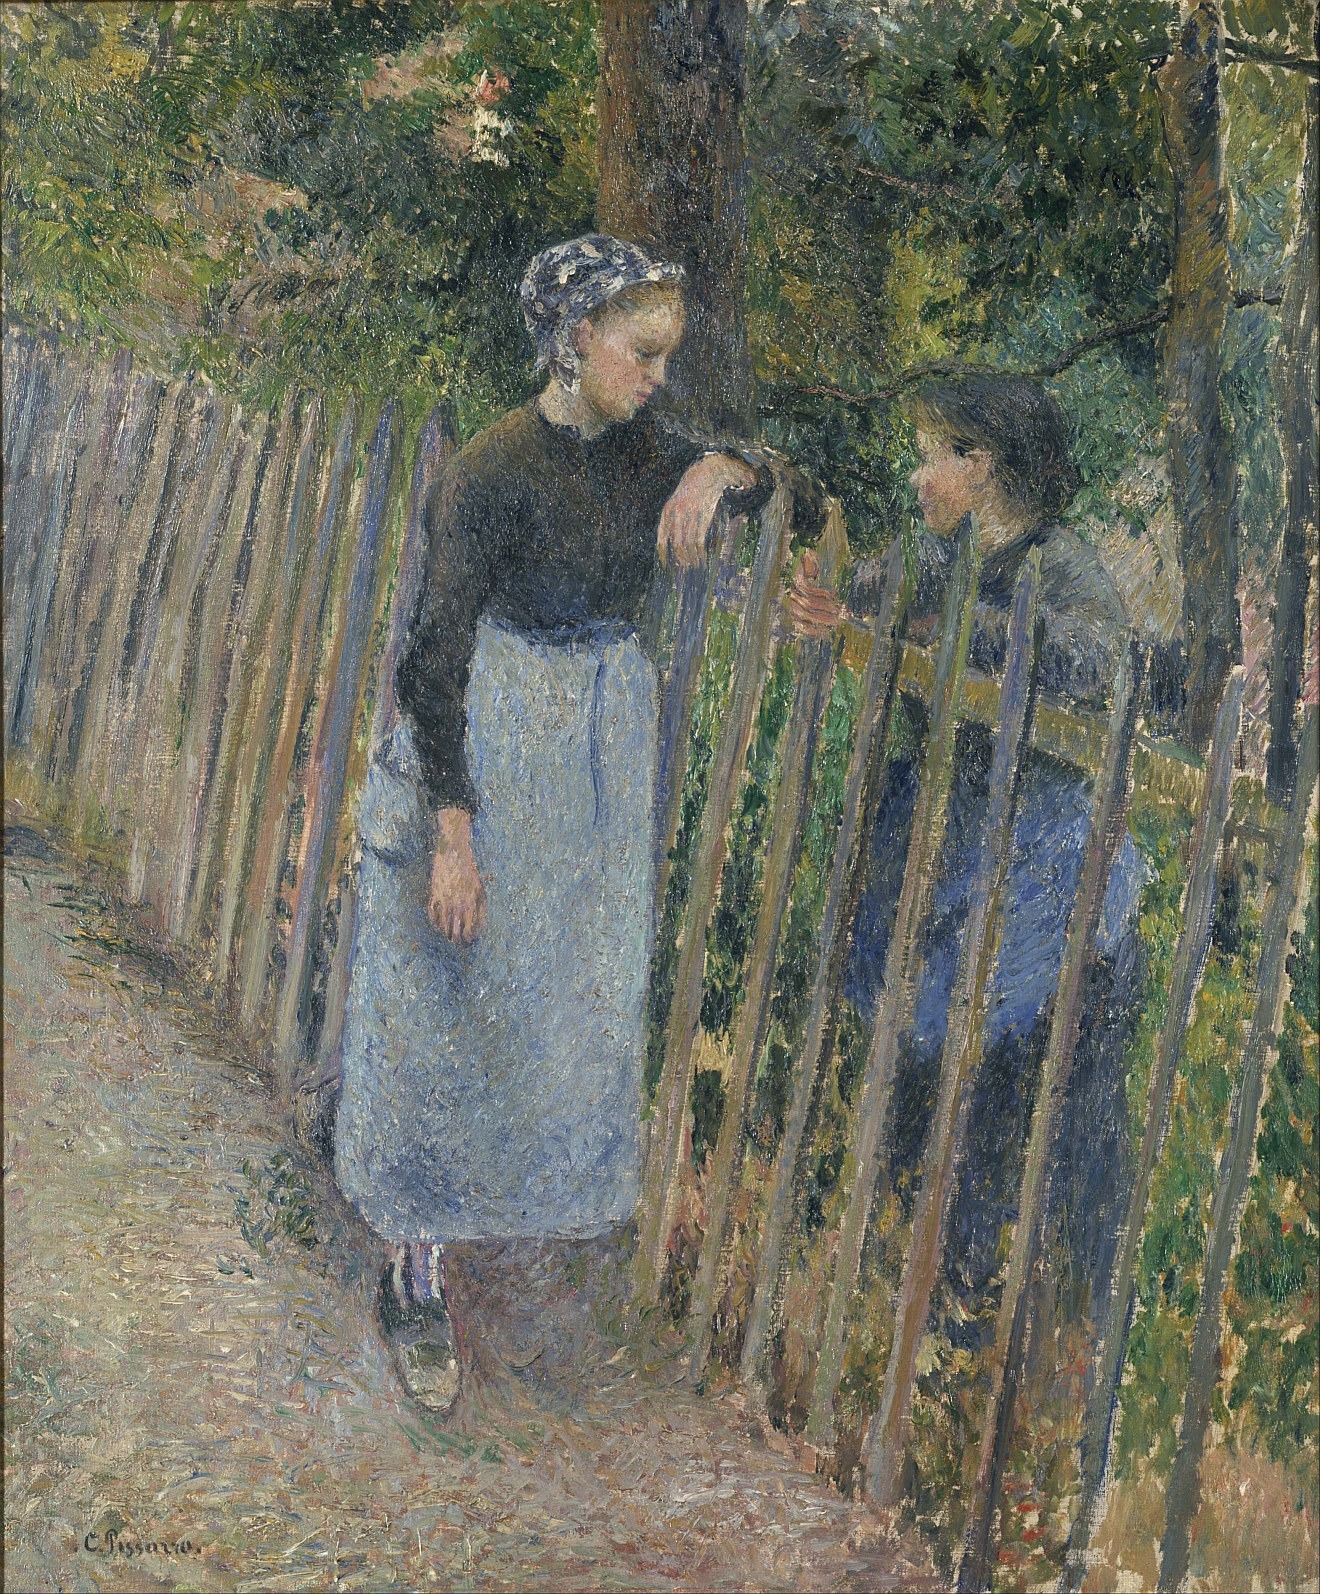 Camille+Pissarro-1830-1903 (221).jpg